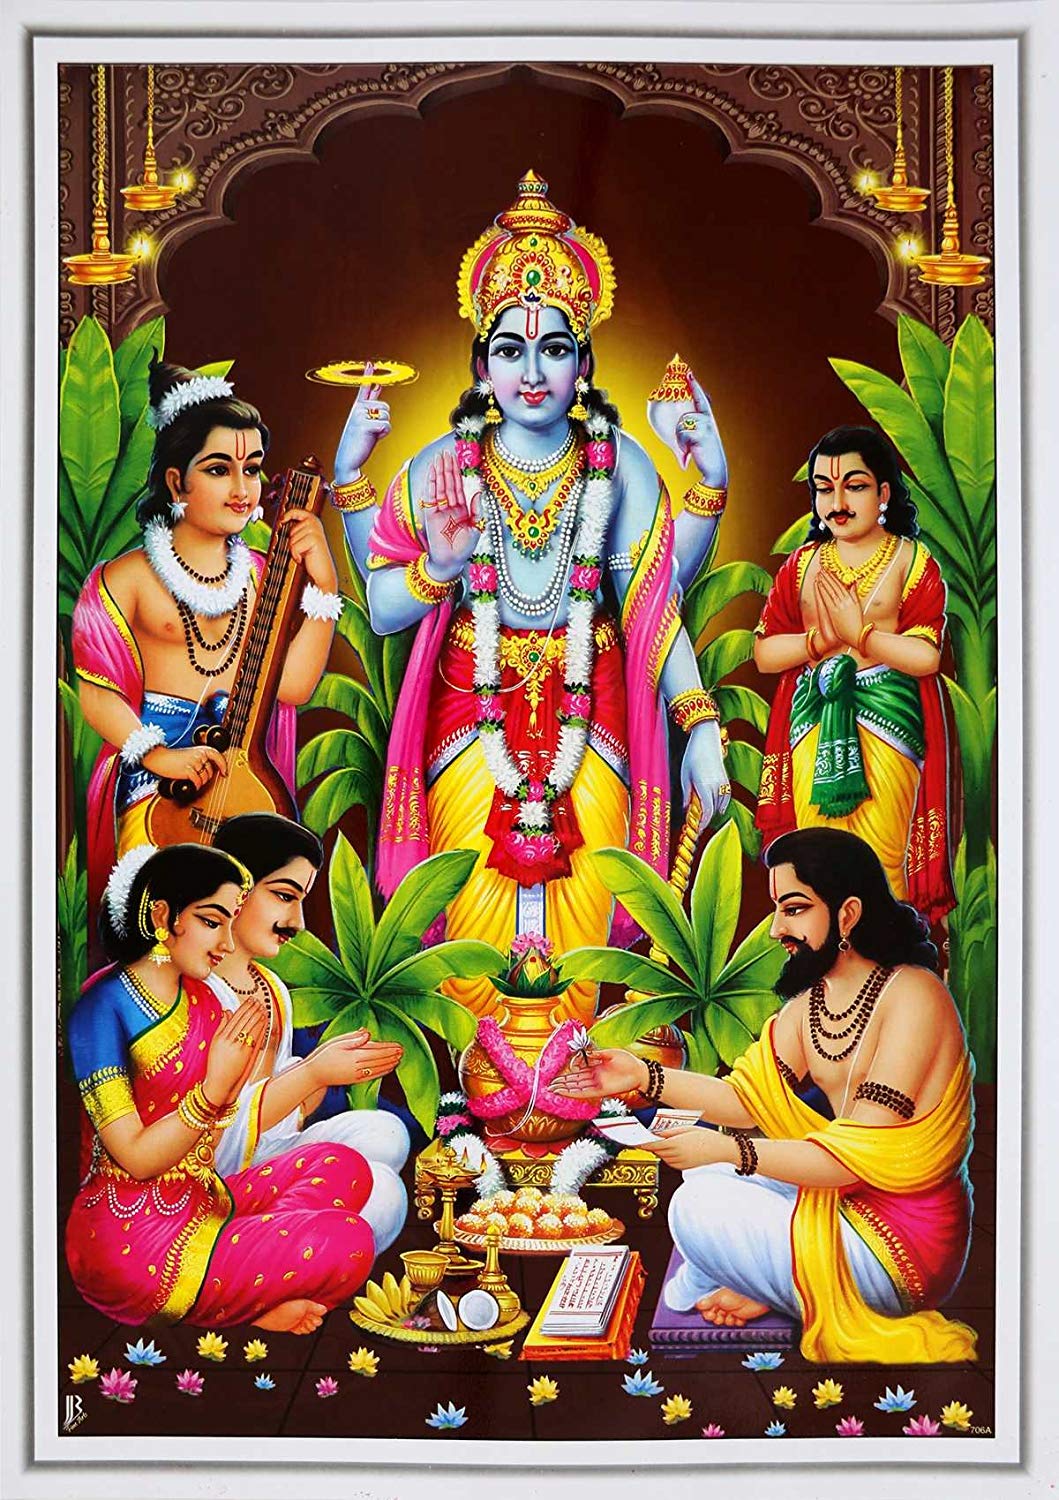 Satyanarayana Swamy Images, Photos and images of Lord Satyanarayana Swamy, ...